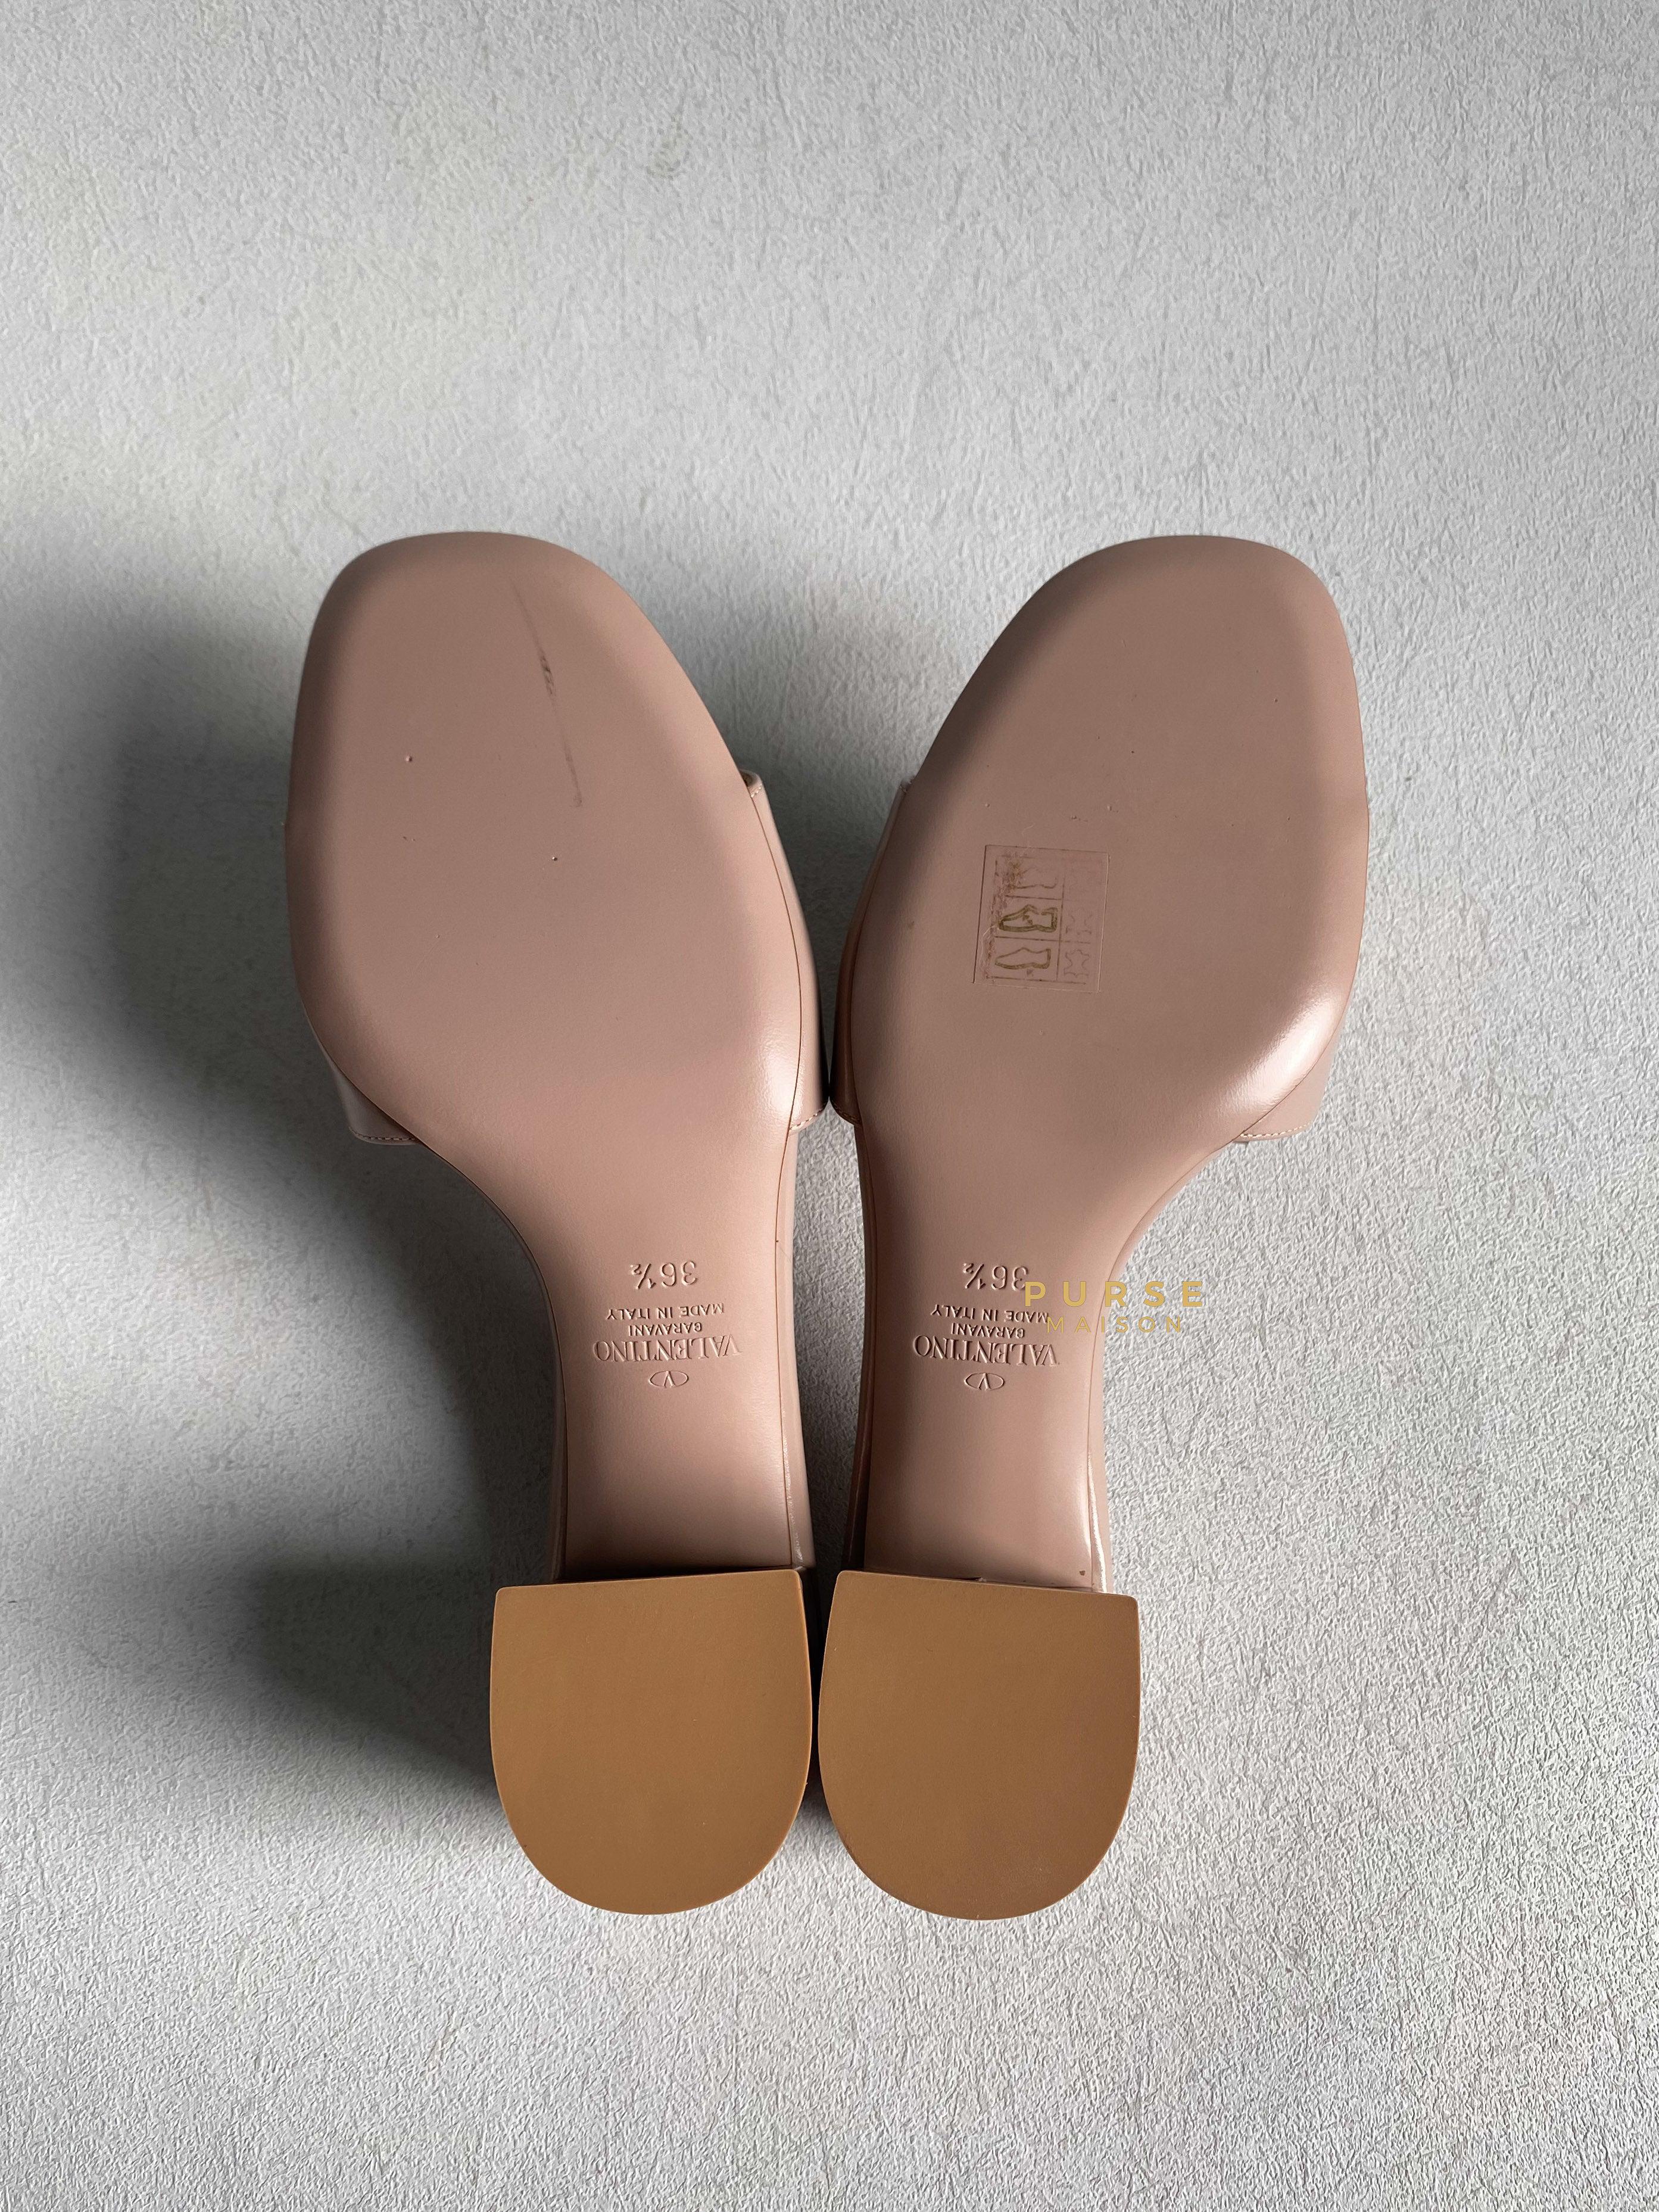 Valentino Garavani Beige Leather VLogo Open Toe Heeled Sandals Size 36.5 EU | Purse Maison Luxury Bags Shop